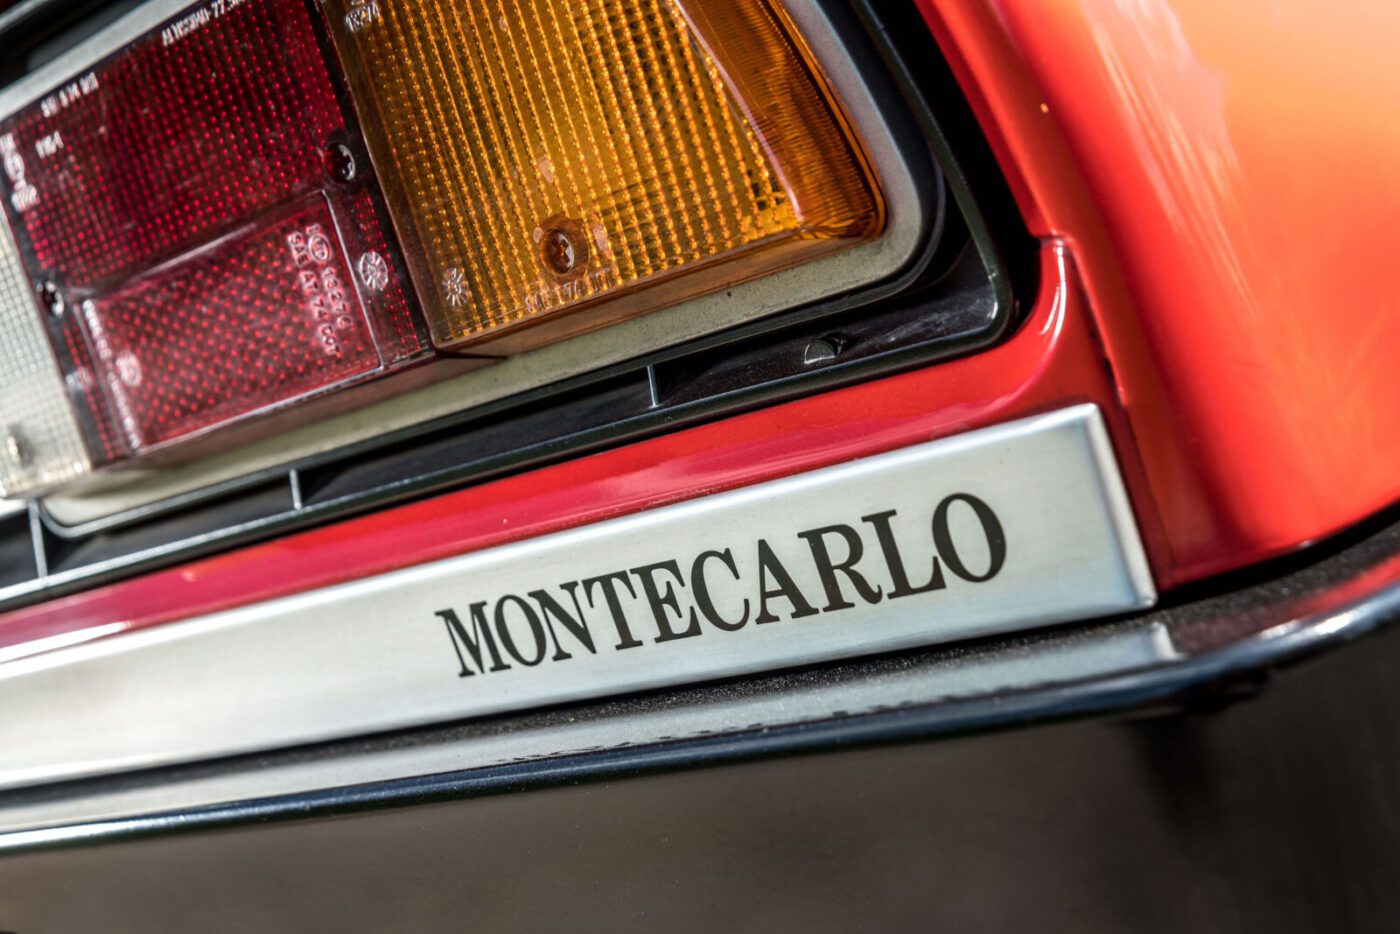 Lancia Montecarlo name rear light